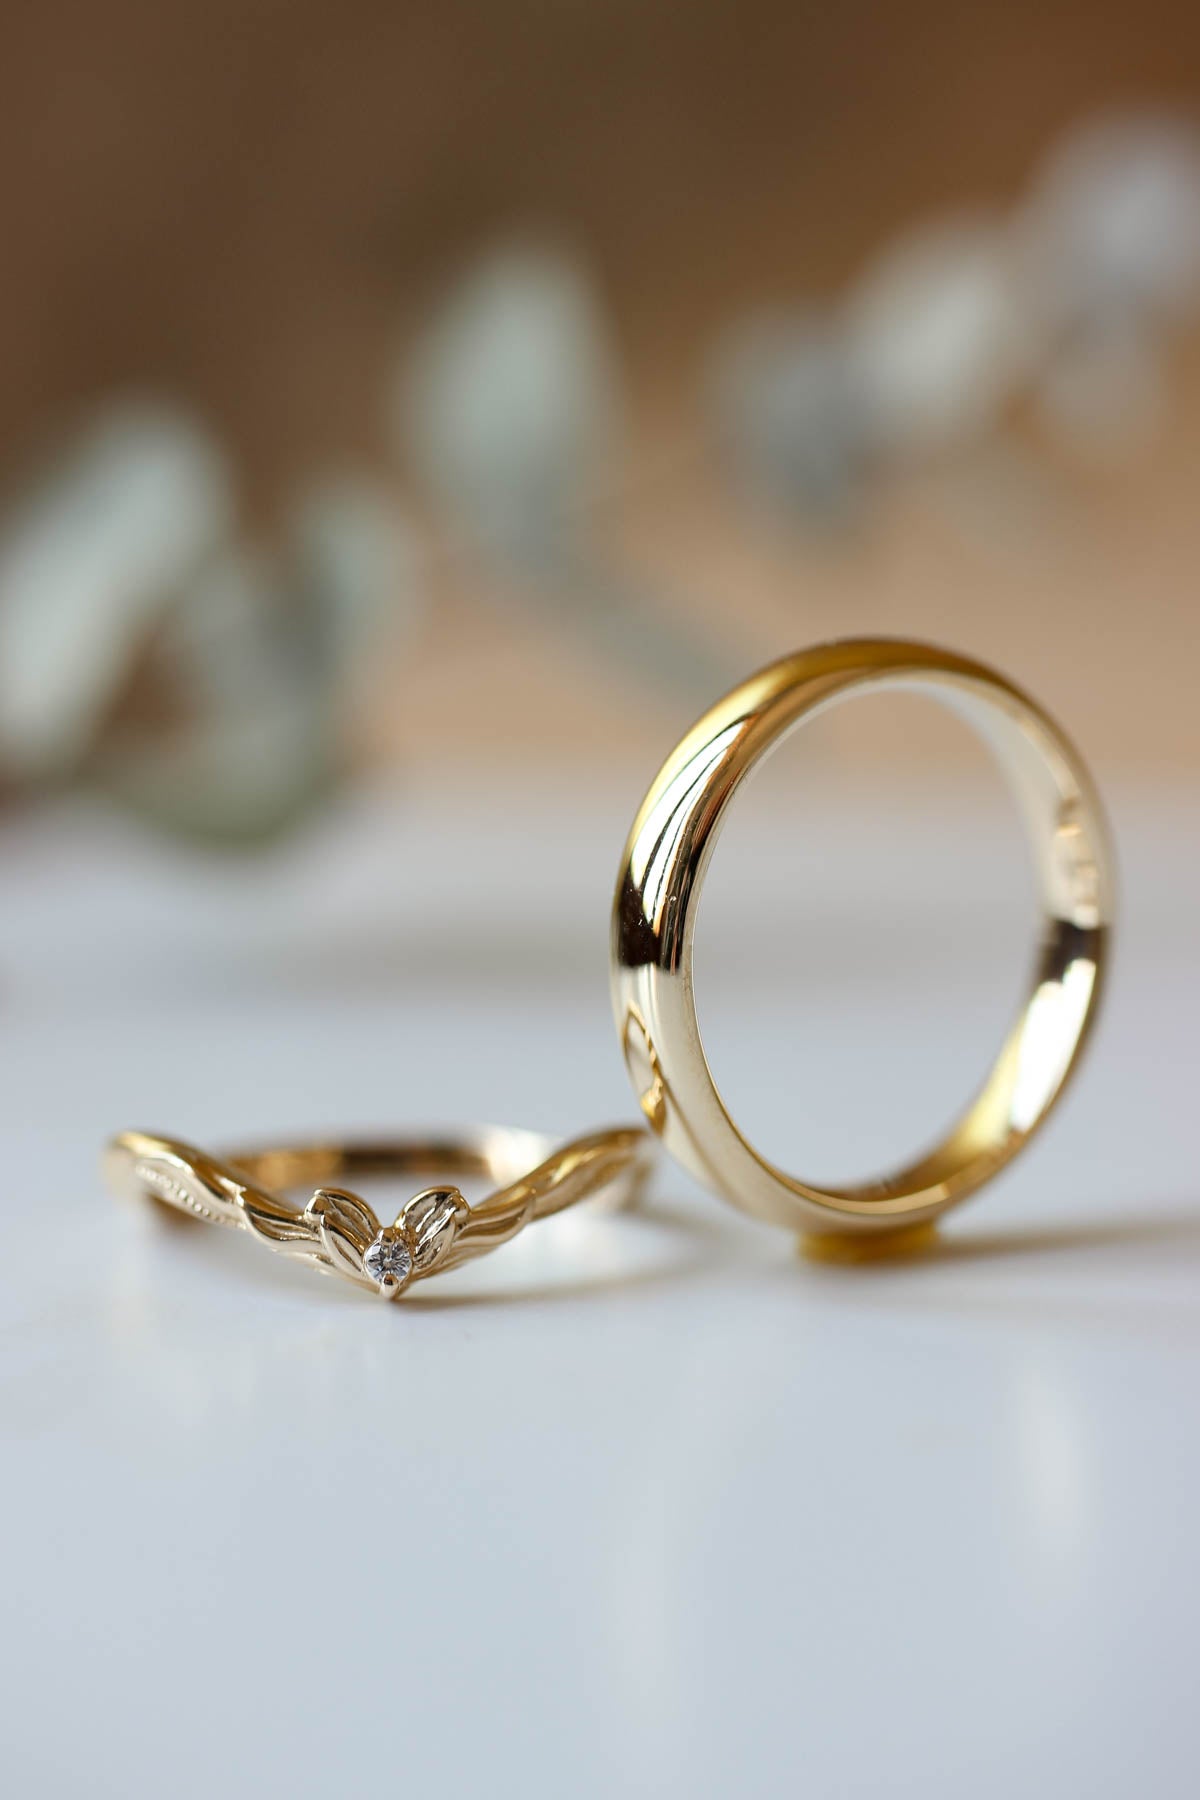 Ebay Jewelry Wedding Rings Top Sellers - www.decision-tree.com 1694043291